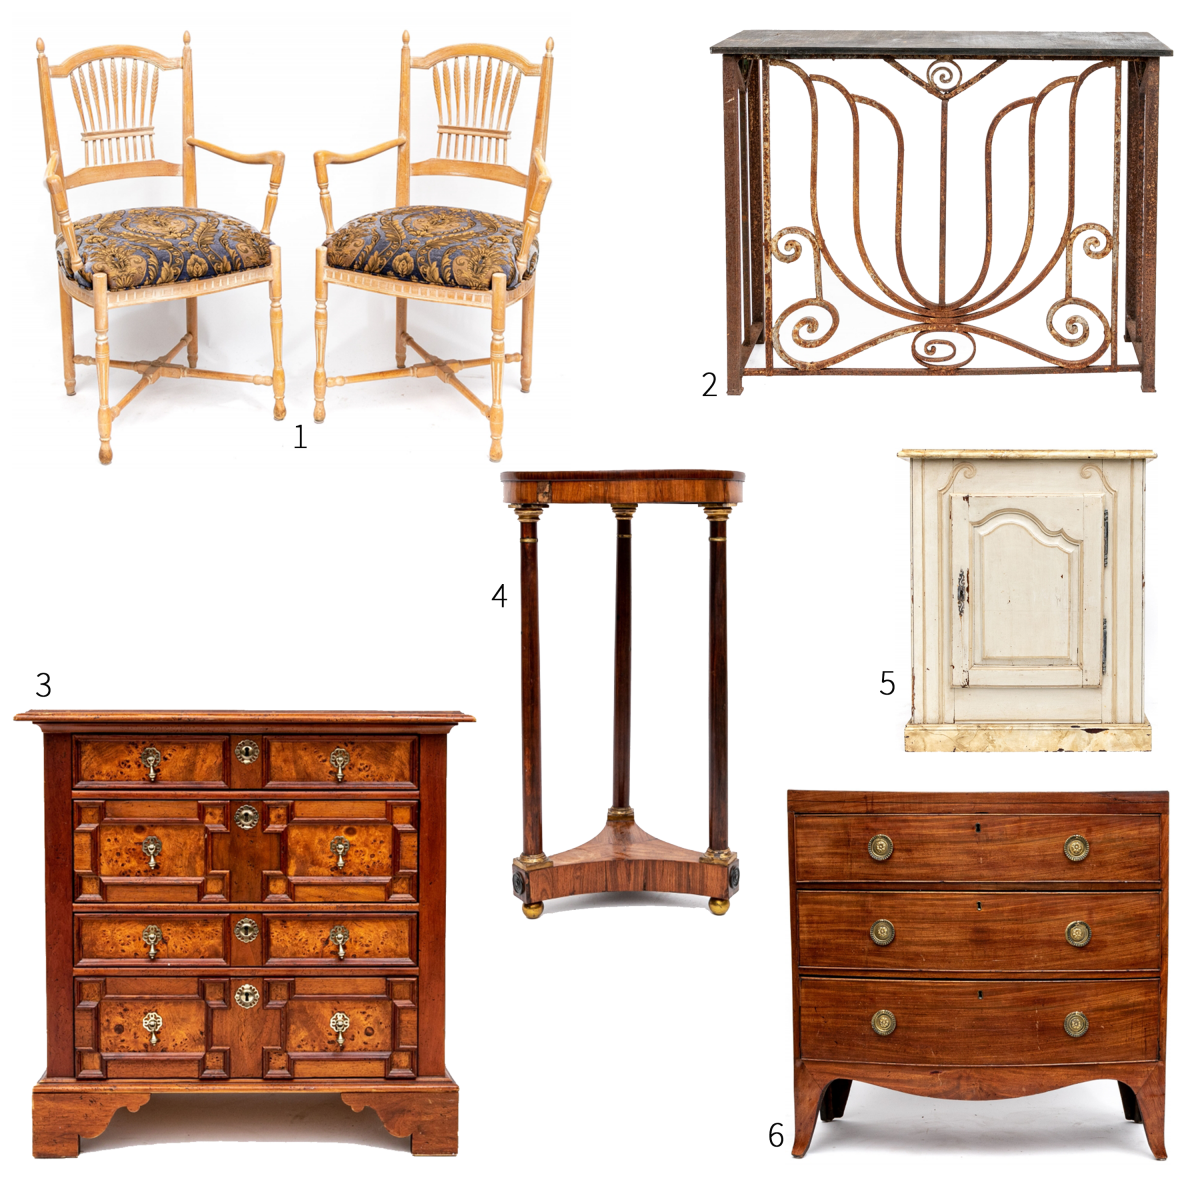 Antique & vintage furniture from the estate of William Billie Durham